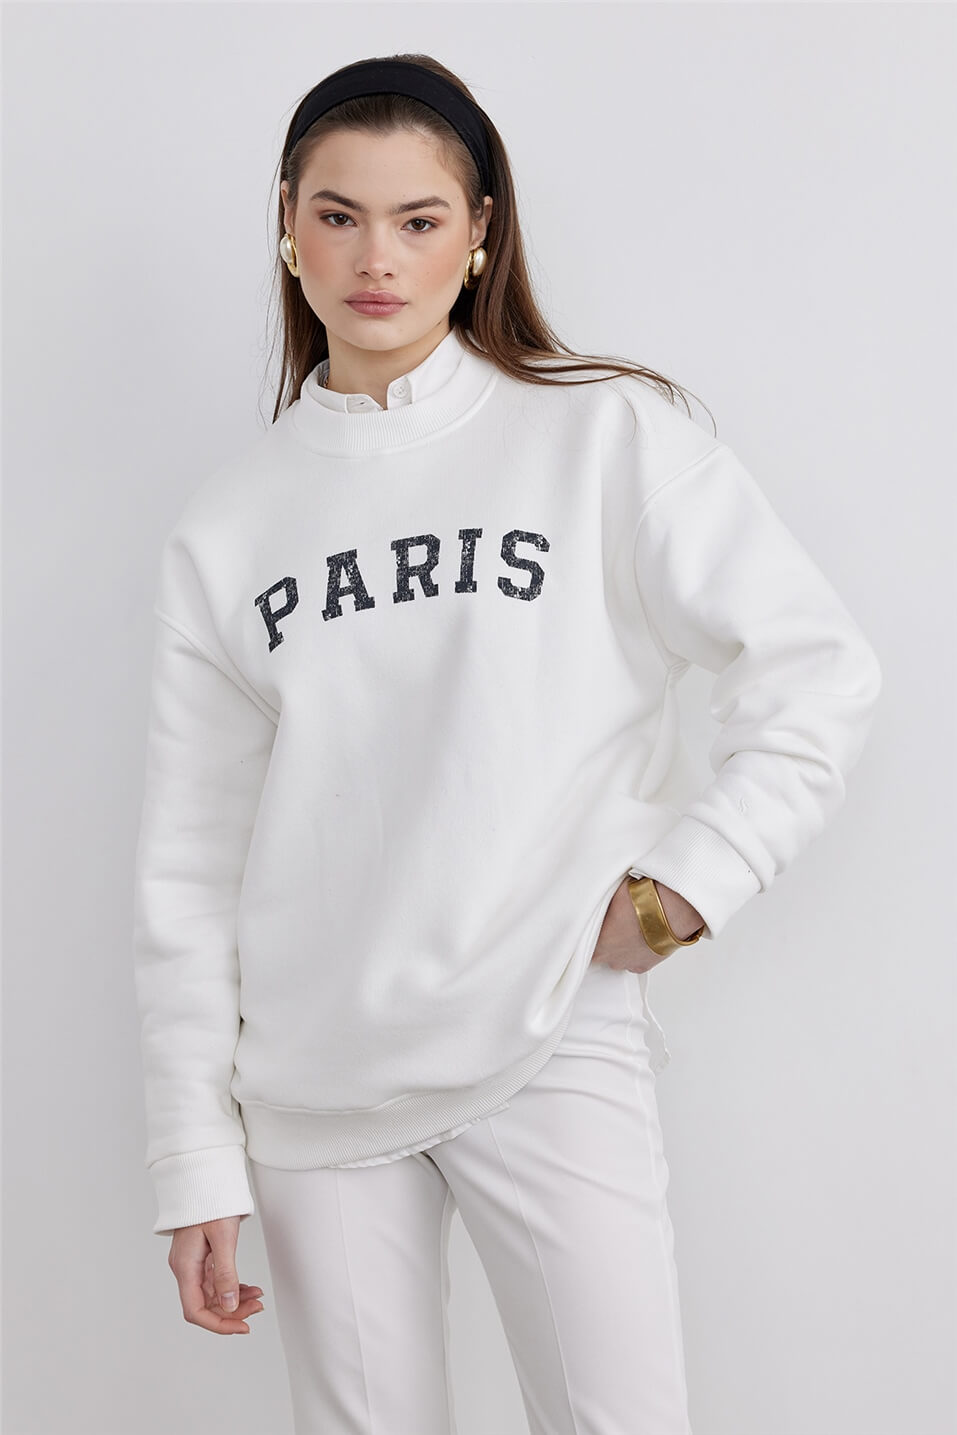 Paris Printed Oversized Sweatshirt